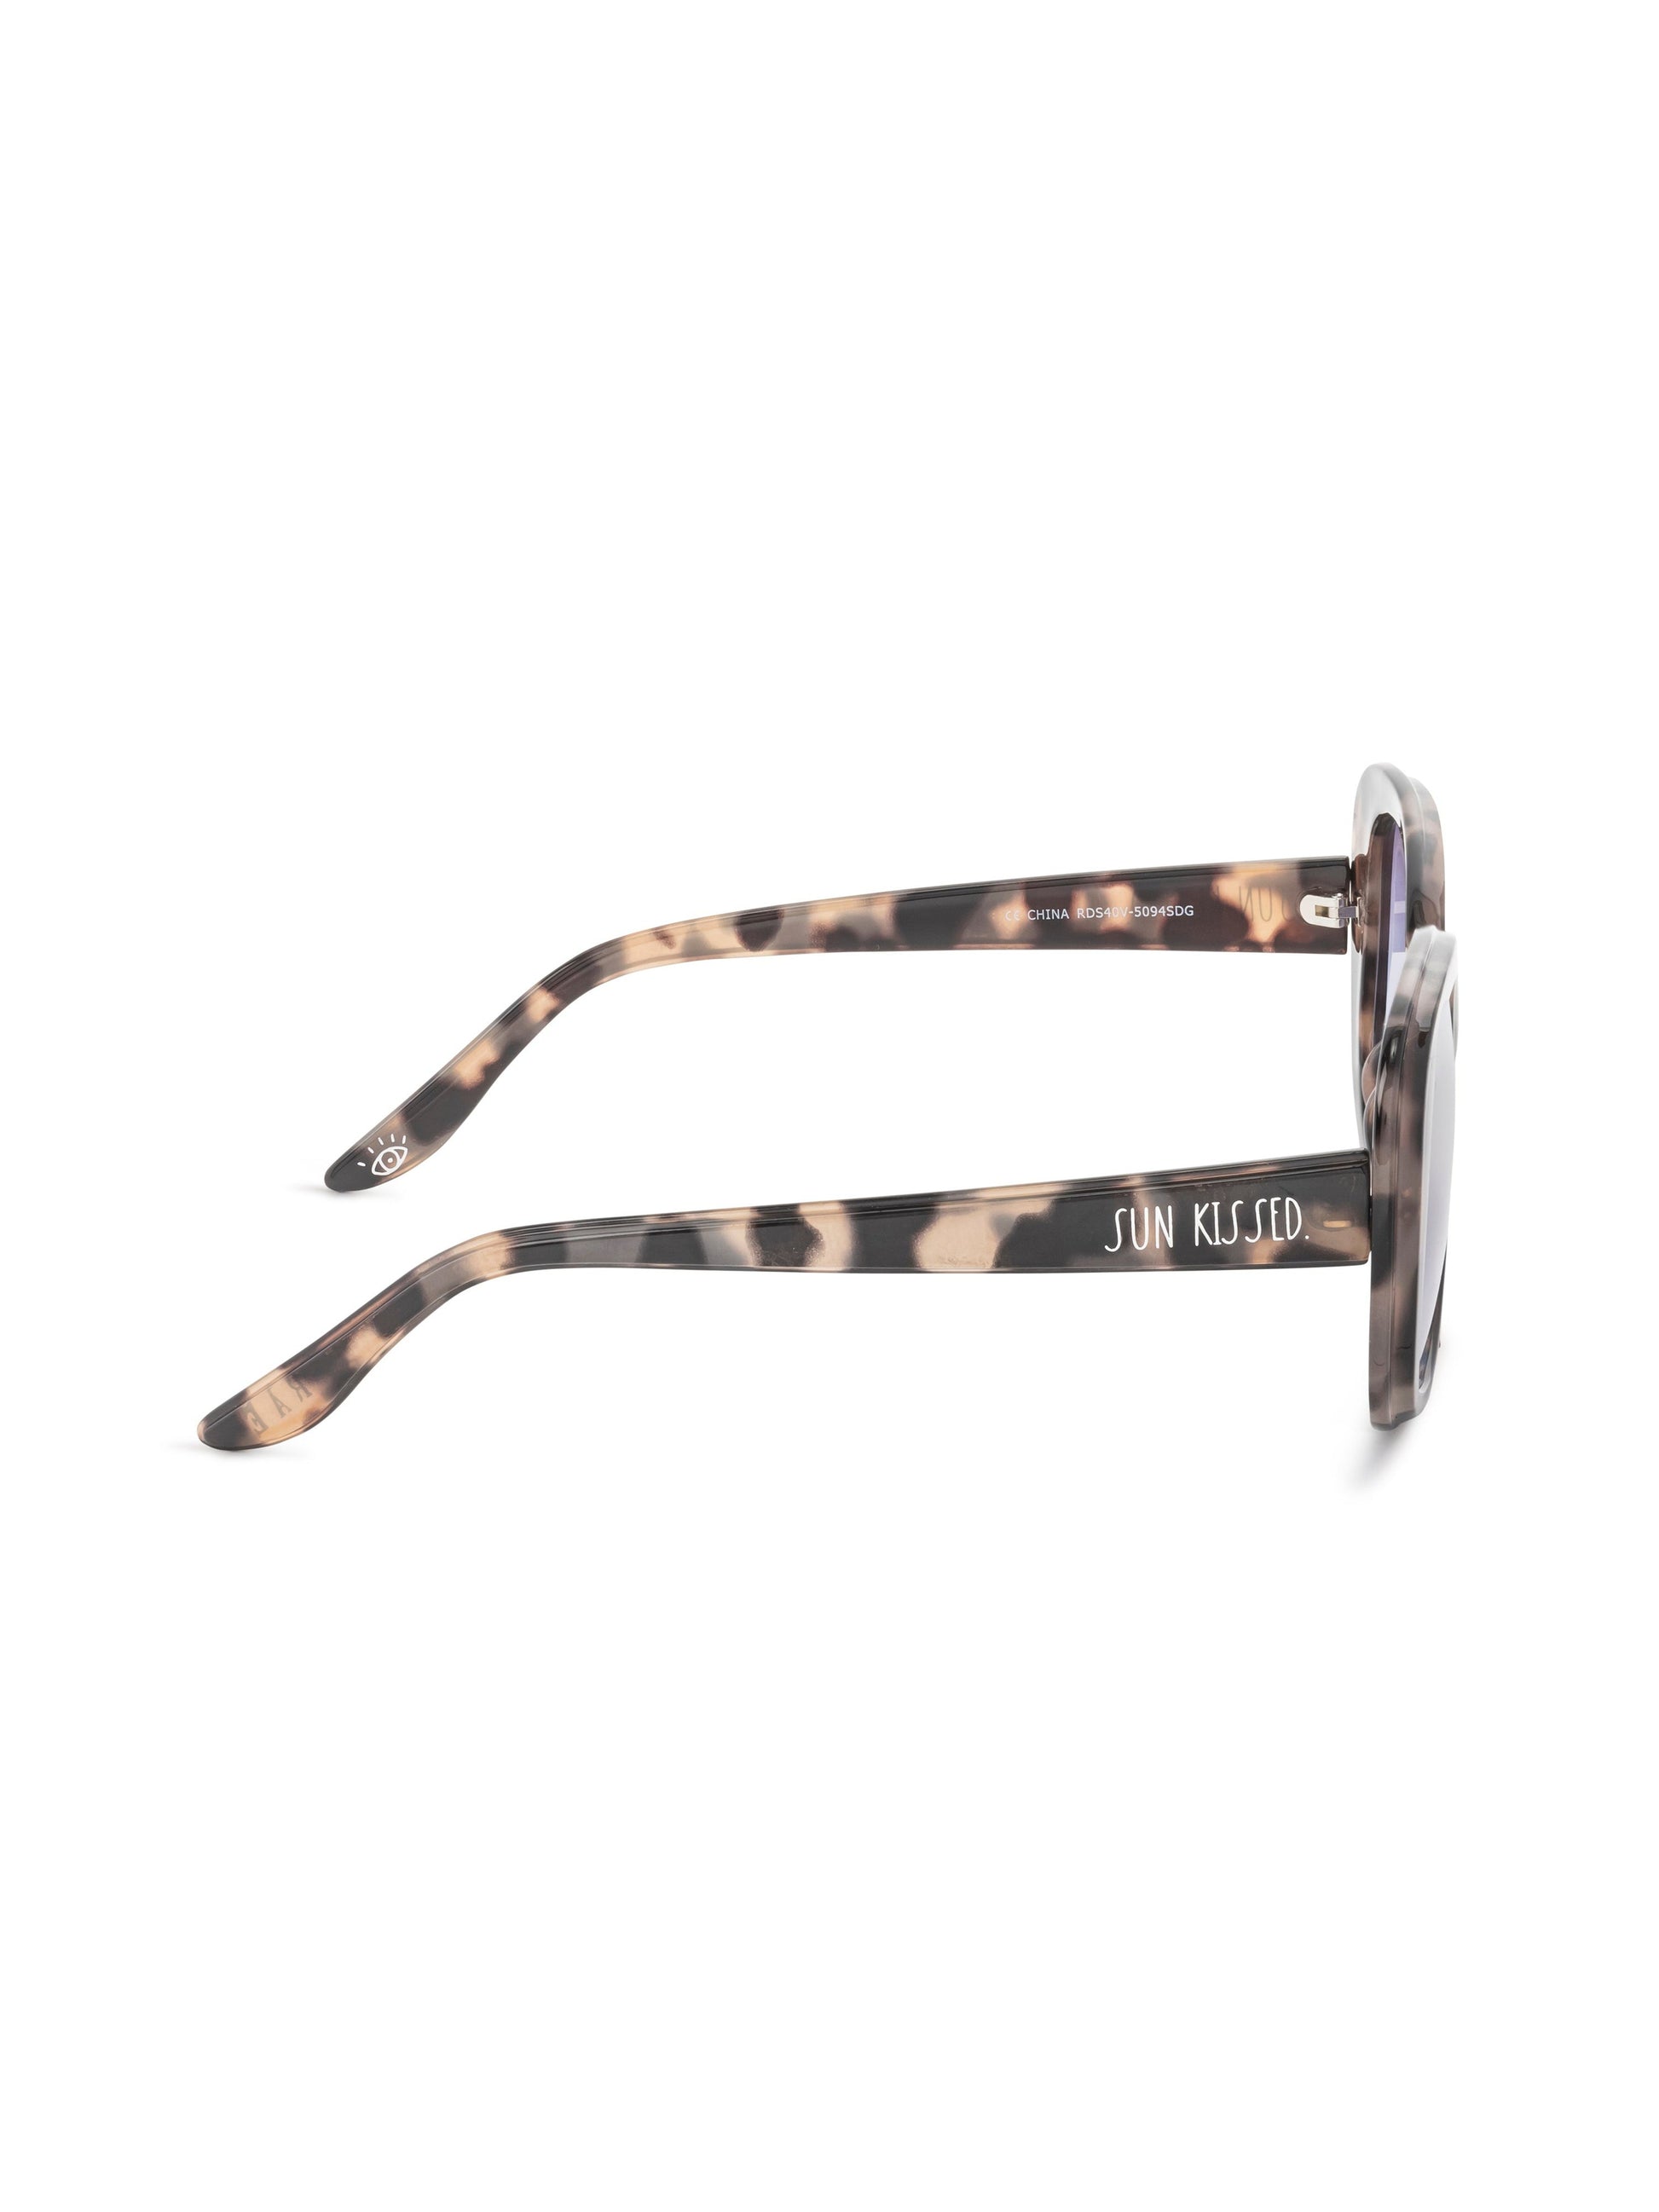 RENEE Premium Sunglasses with "SUN KISSED" Signature Font - Rae Dunn Wear